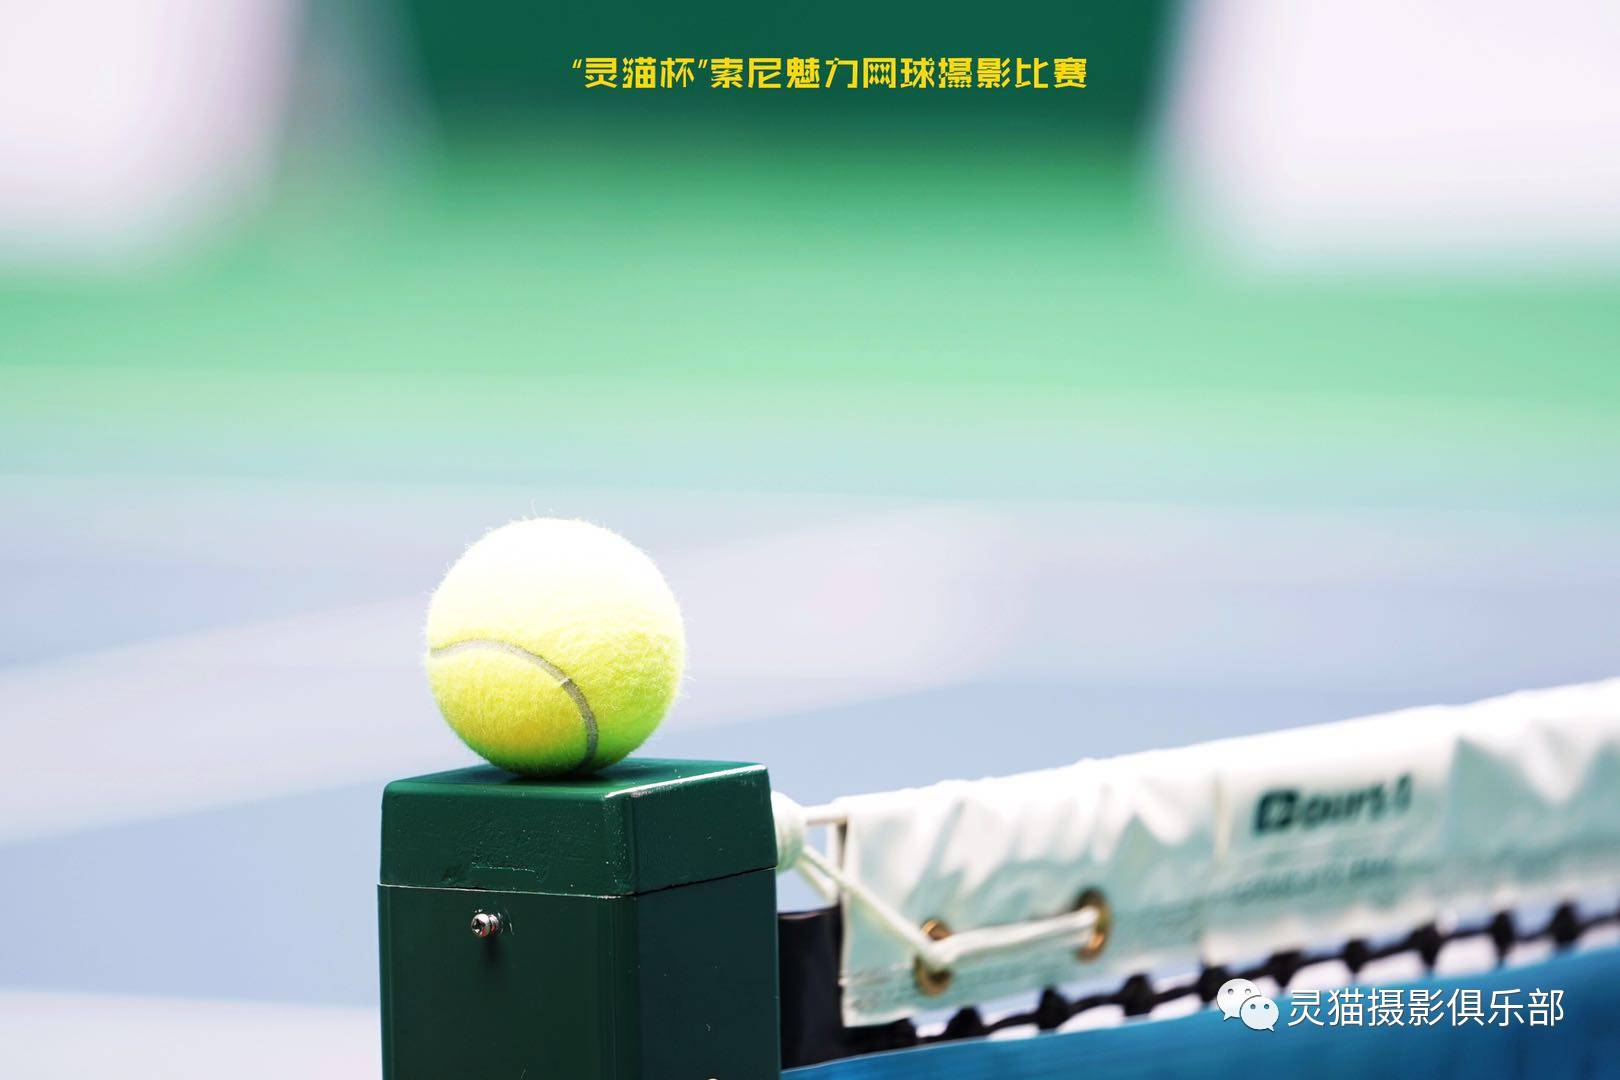 Tennis World Tour 2 网球世界巡回赛2 与全球排名第一线上联机_哔哩哔哩_bilibili